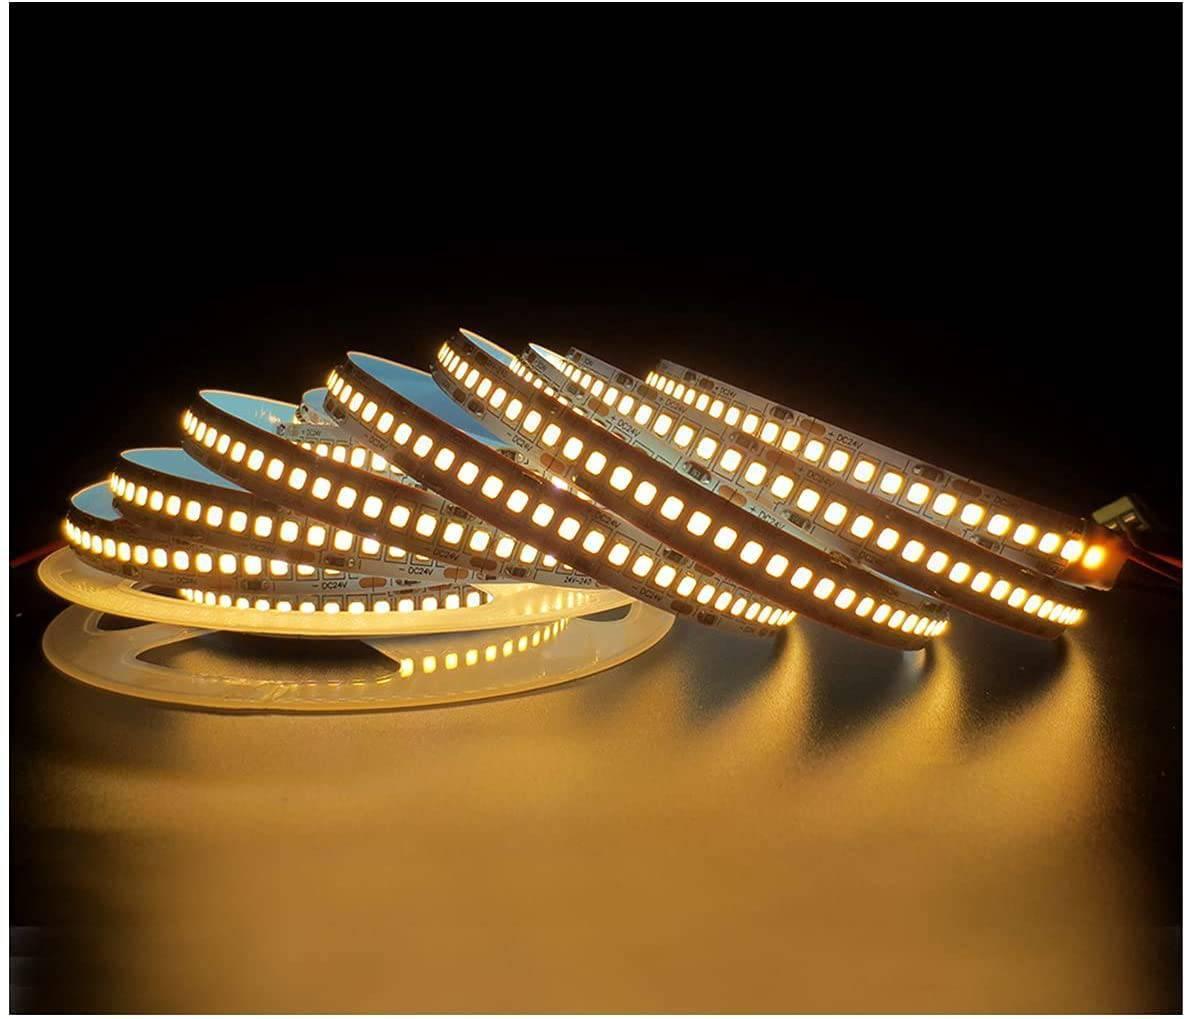 Tesfish 12V LED Strip Lights, 240 LEDs/M, Total 1200 LEDs Warm White 3000K  16.4 ft LED Light Strip 2835 IP20 LED Tape Lights Super Bright for Bedroom